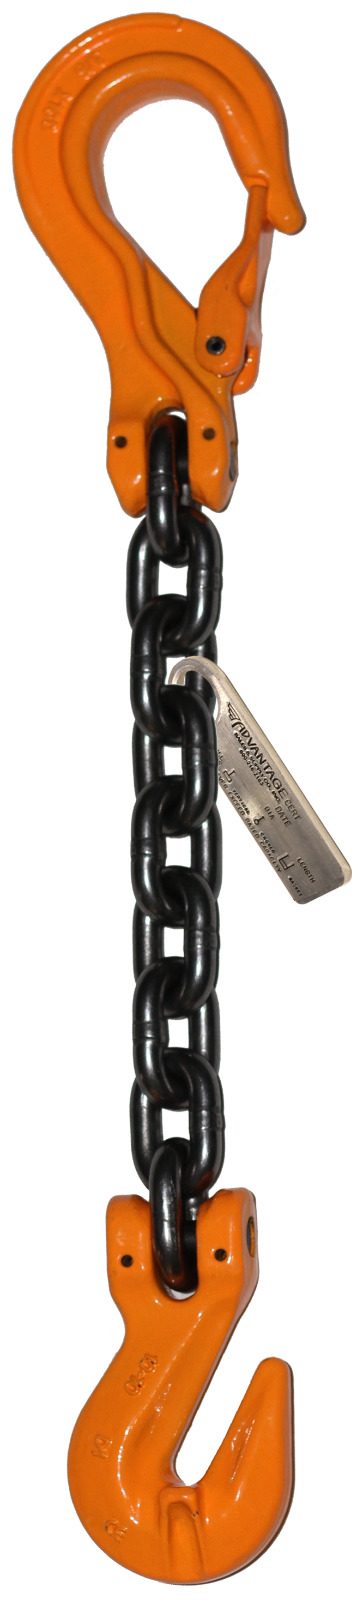 3/8" X 20' Grade 100 Lifting Chain Sling Grab Hook Safety Hook Latch Sgs Choker